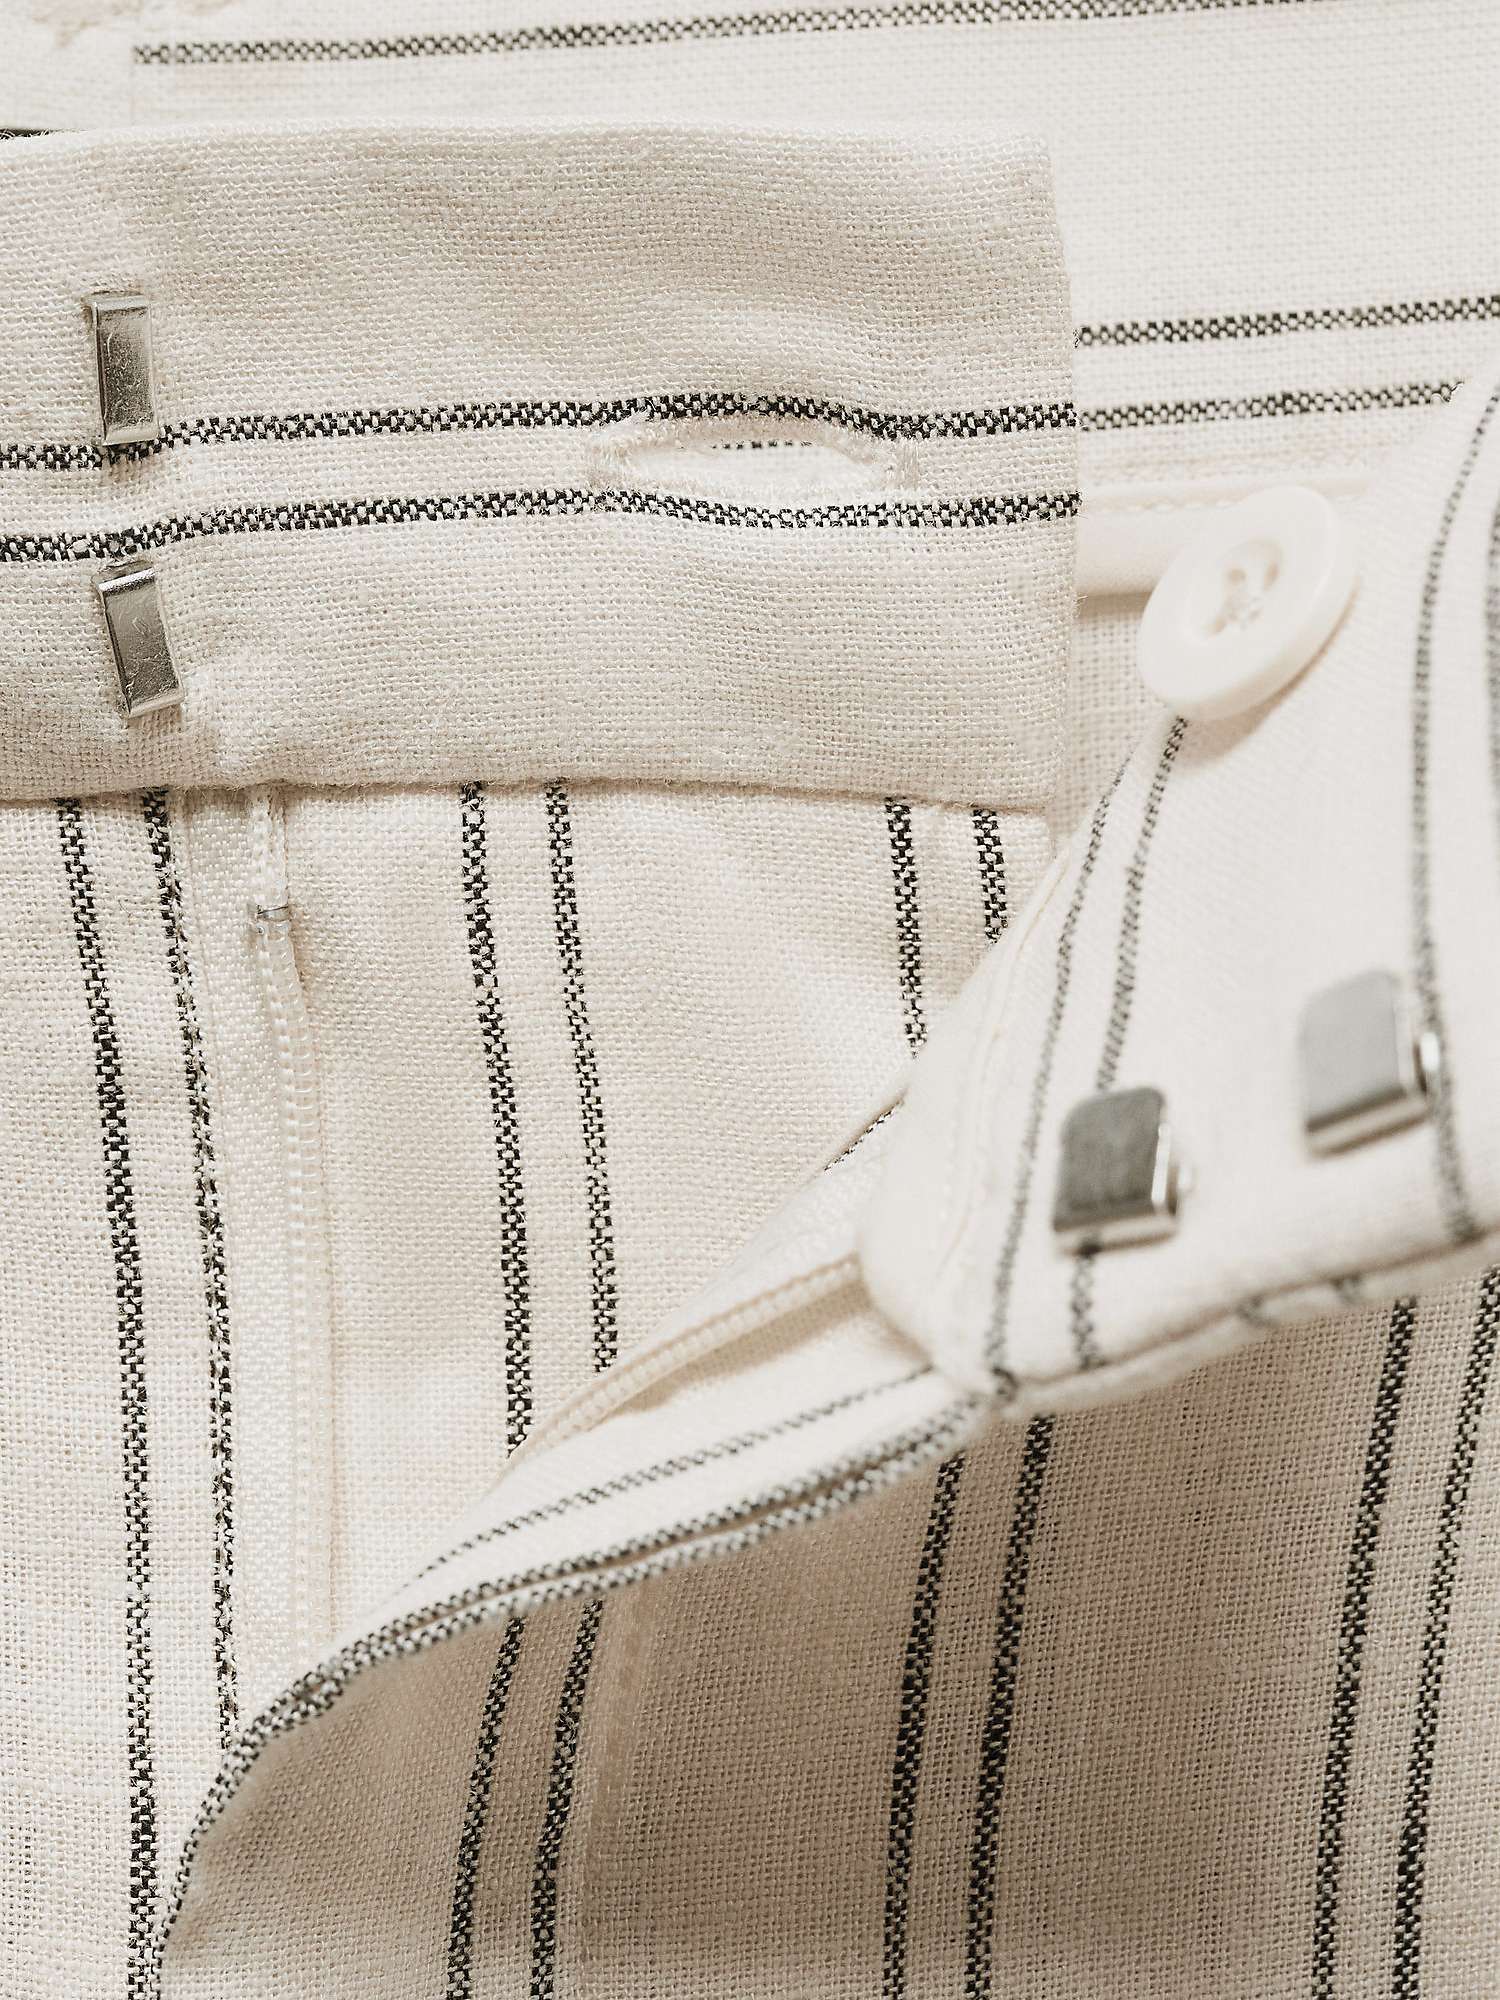 Buy Mango Striped Linen Blend Trousers, Light Beige Online at johnlewis.com